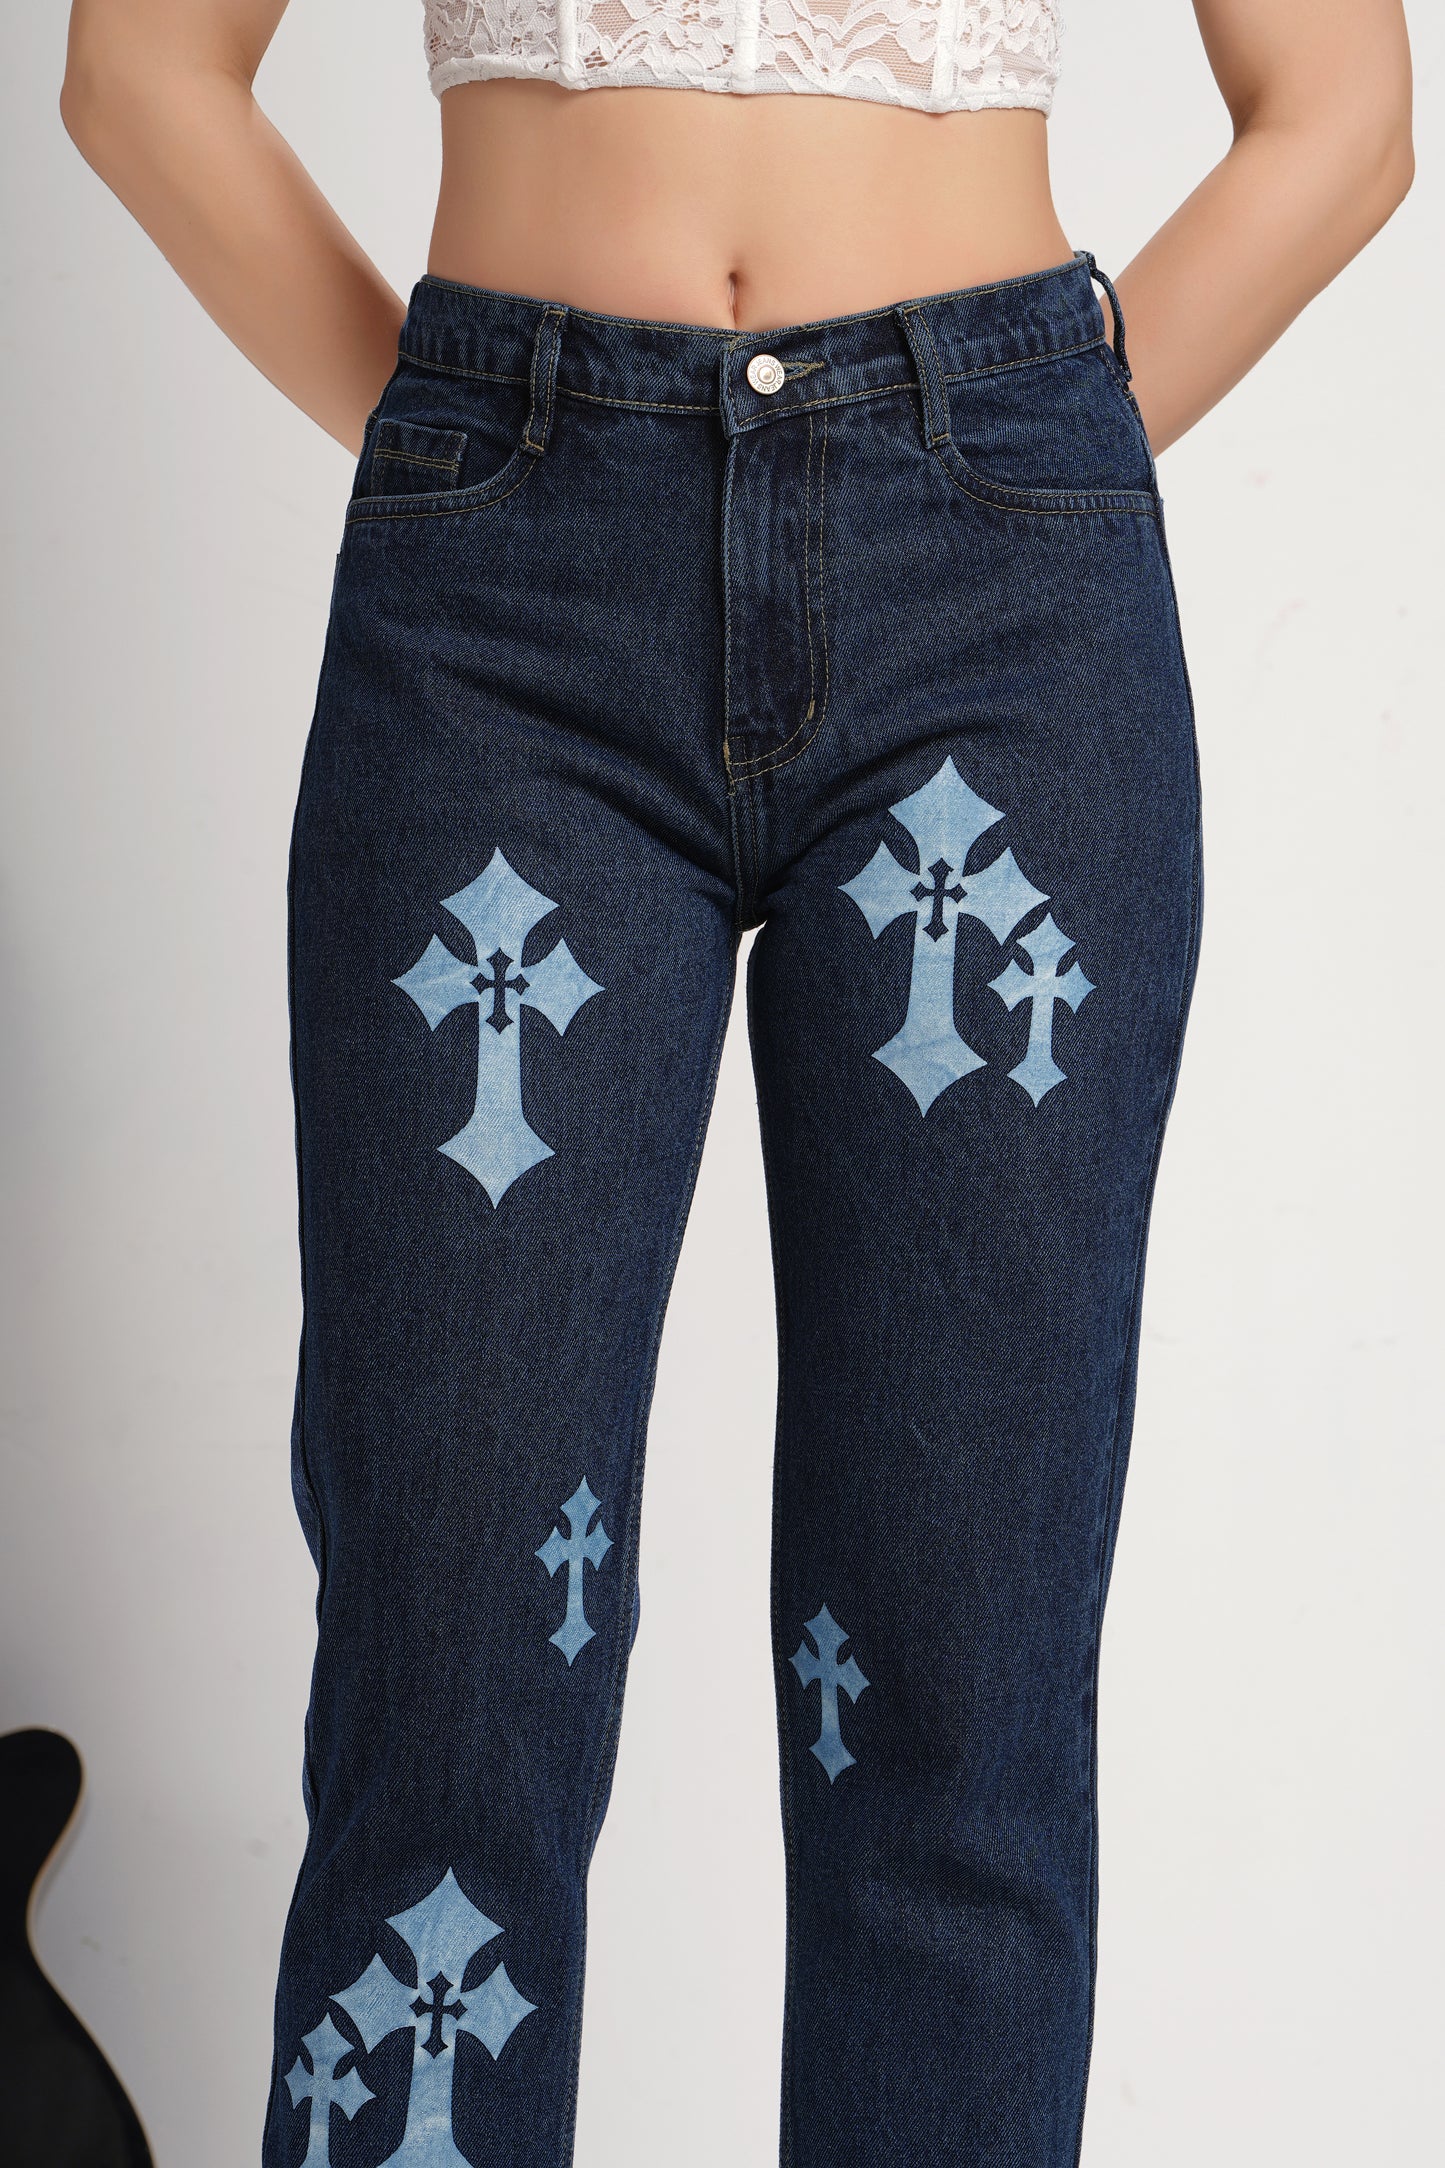 MeQueen Women's Dark Blue Fit Printed Denim Jeans